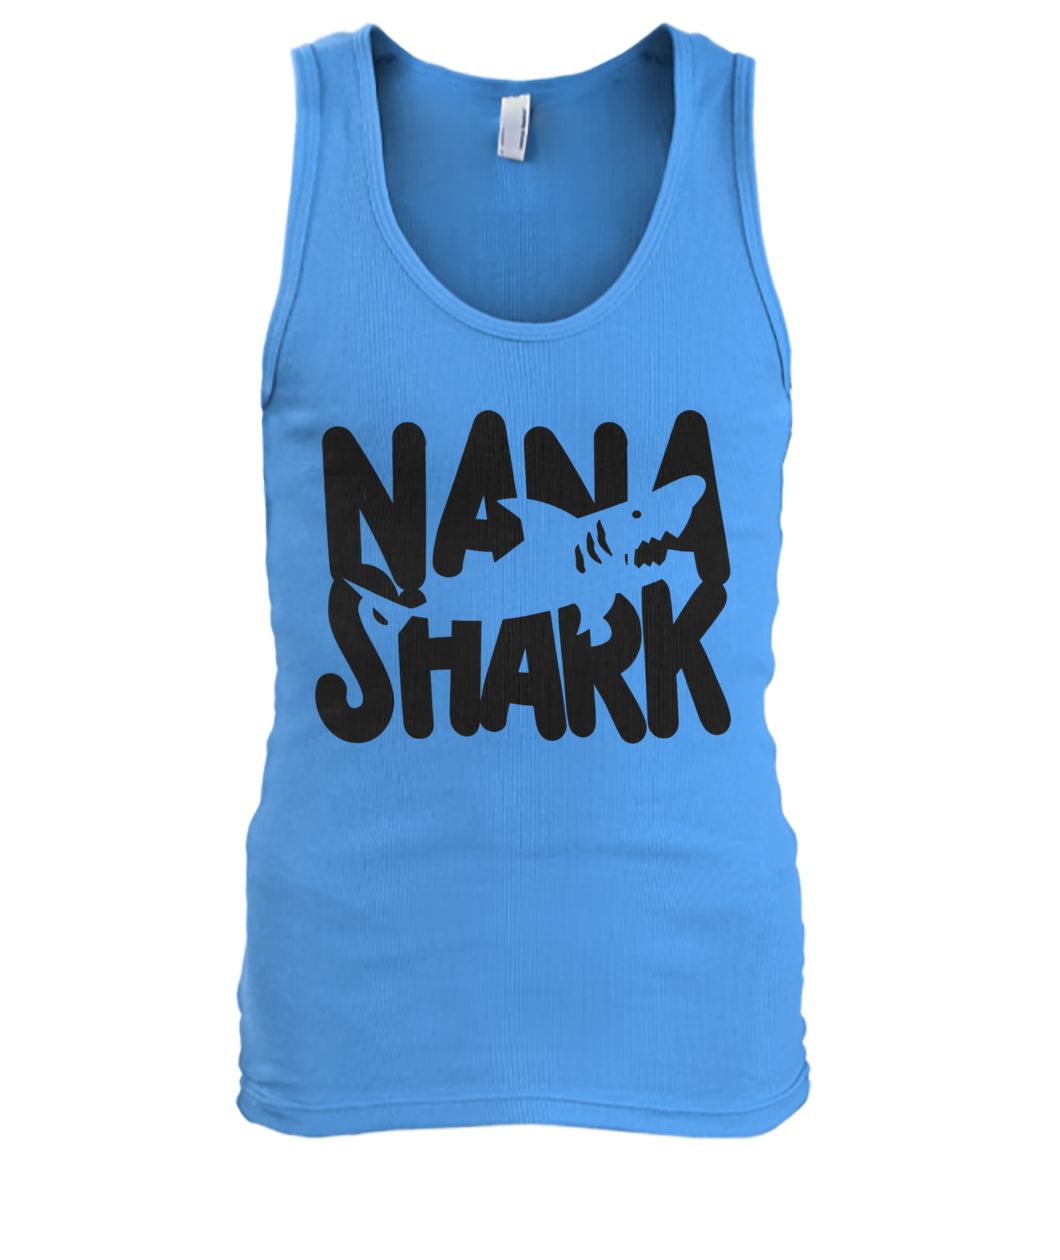 Mother's day nana shark men's tank top